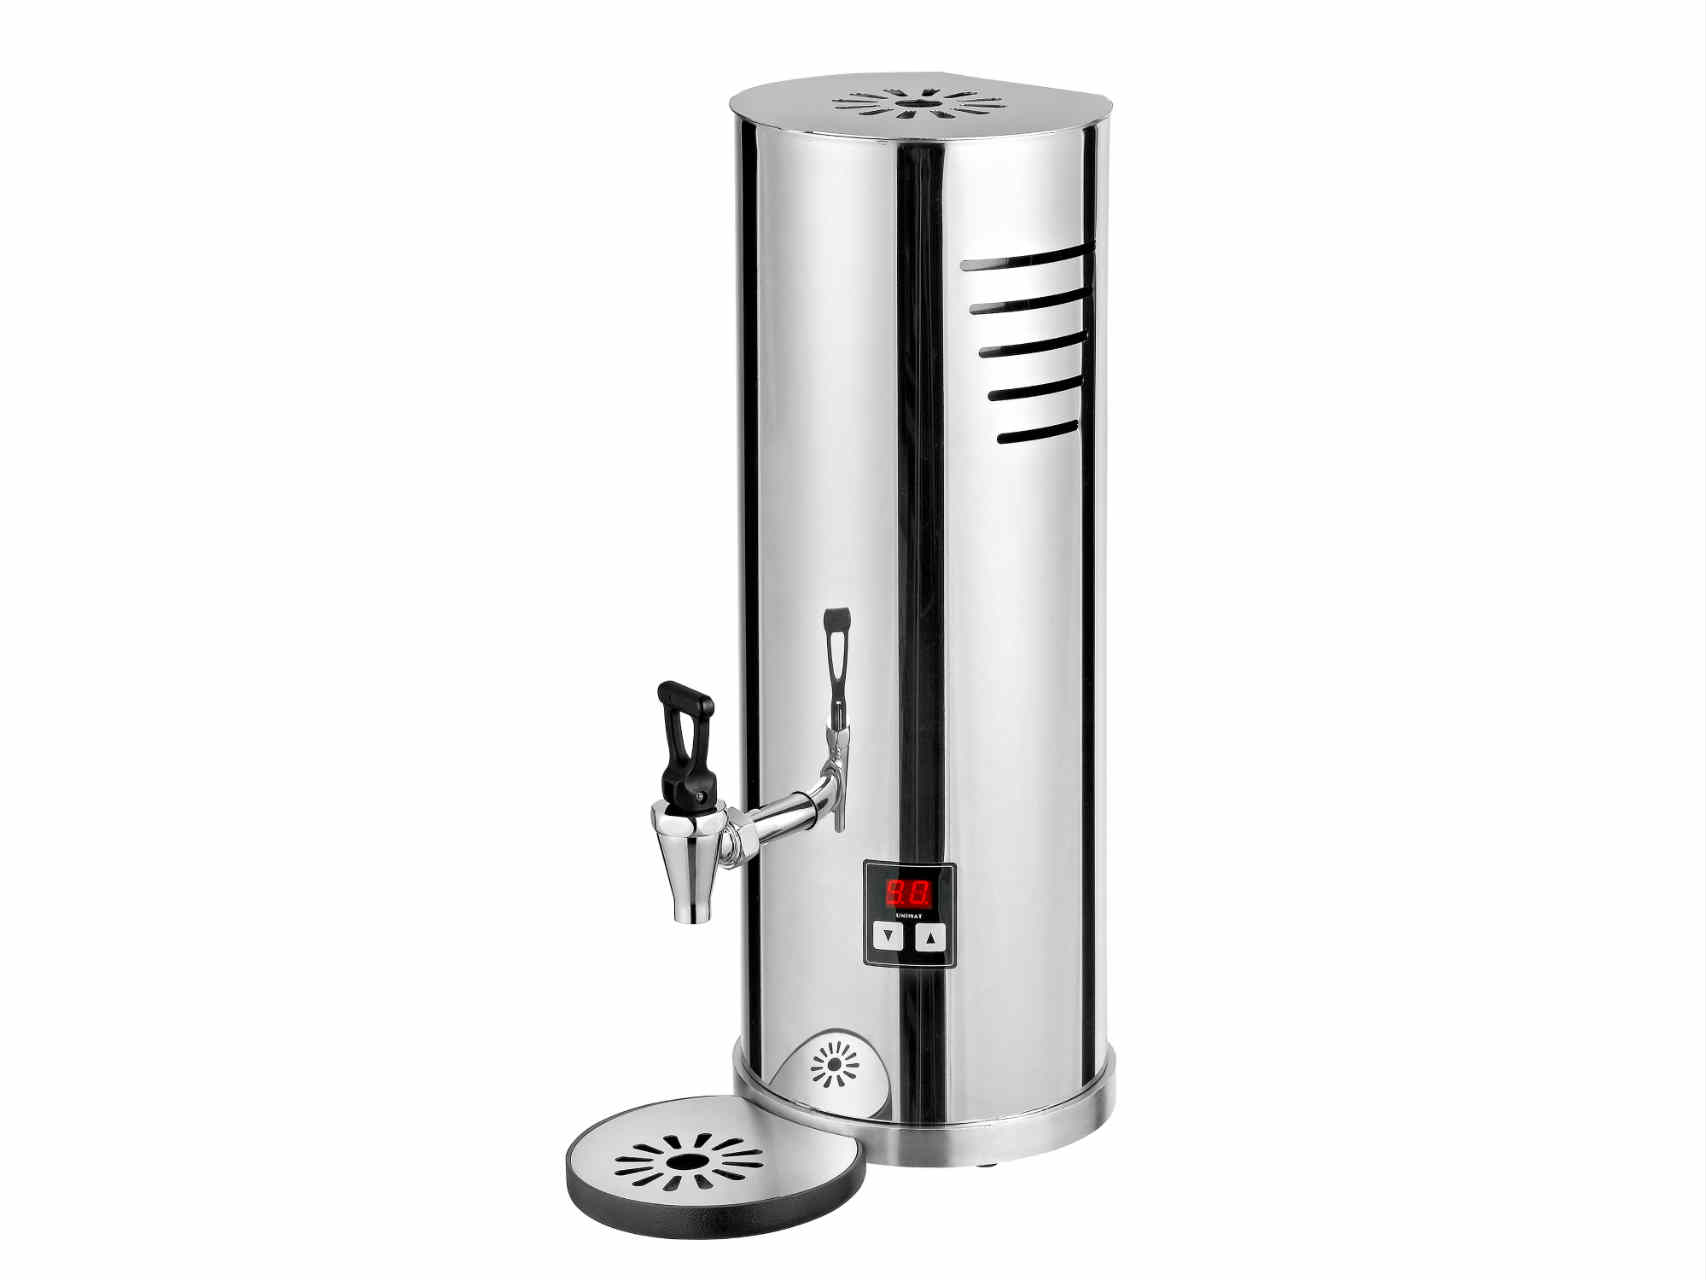 Teeautomat, ) Frankfurt Heißwasserbereiter Samowar, Watt, Teemaschine UNIMMAT (2100